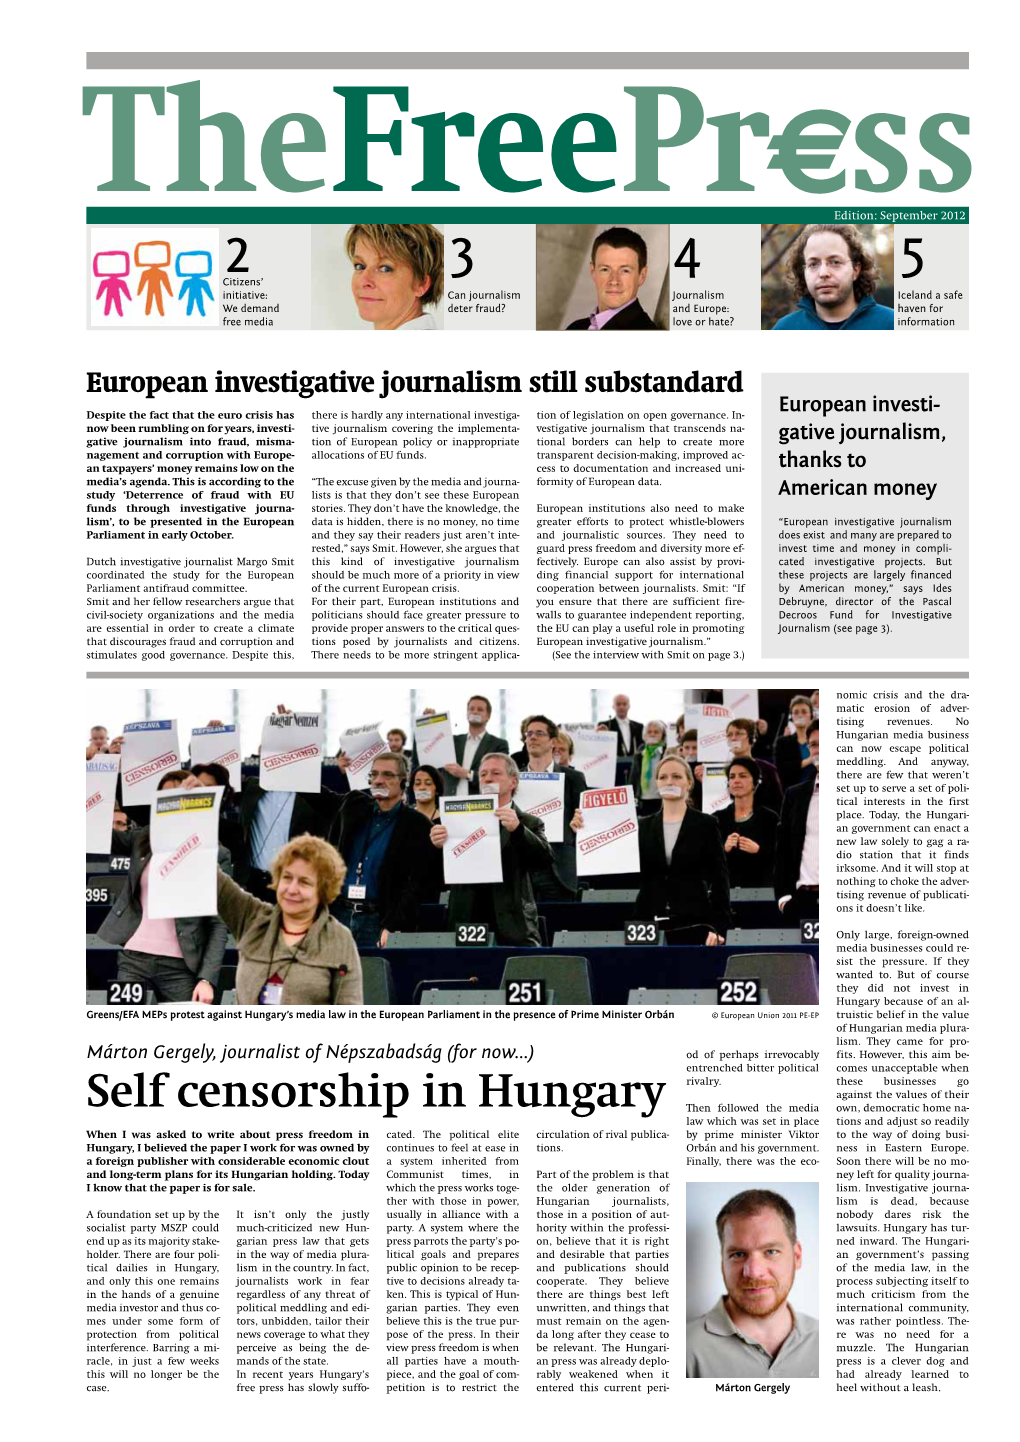 Self Censorship in Hungary